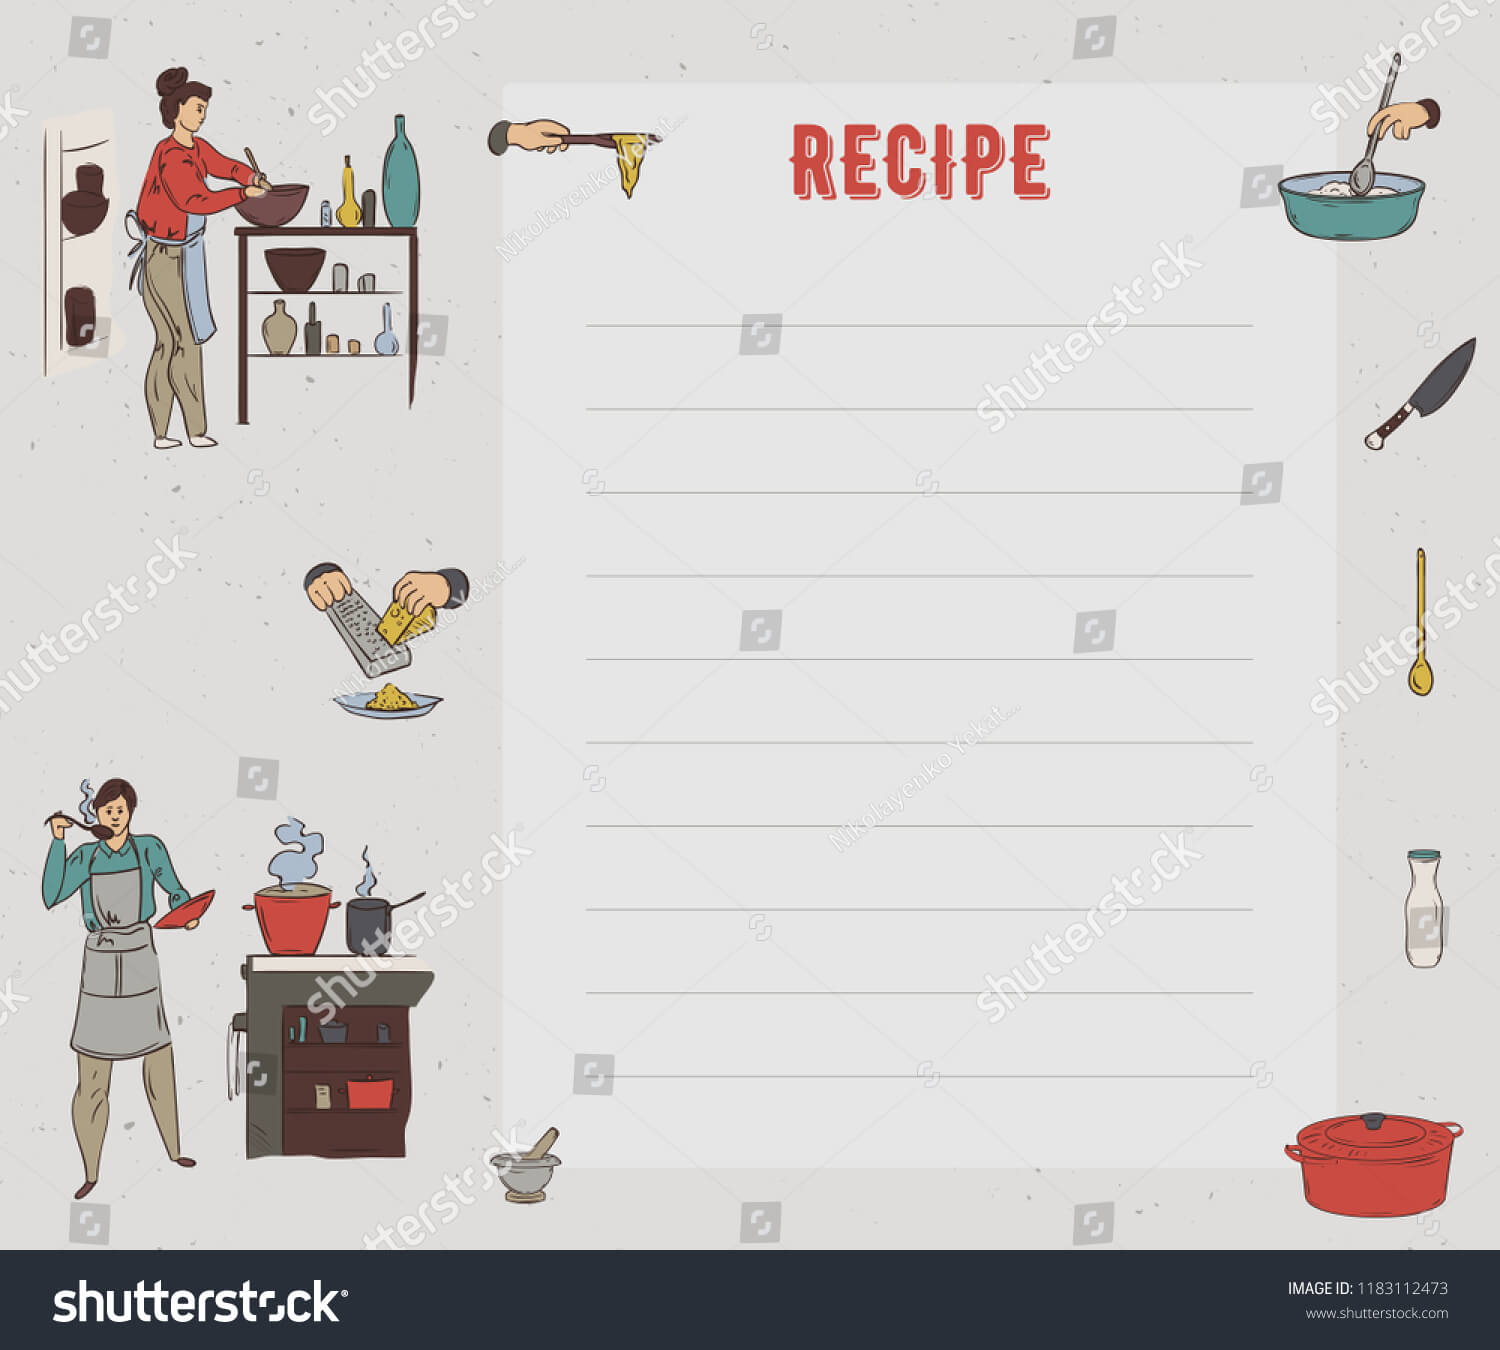 Recipe Card Cookbook Page Design Template Stock Image For Restaurant Recipe Card Template